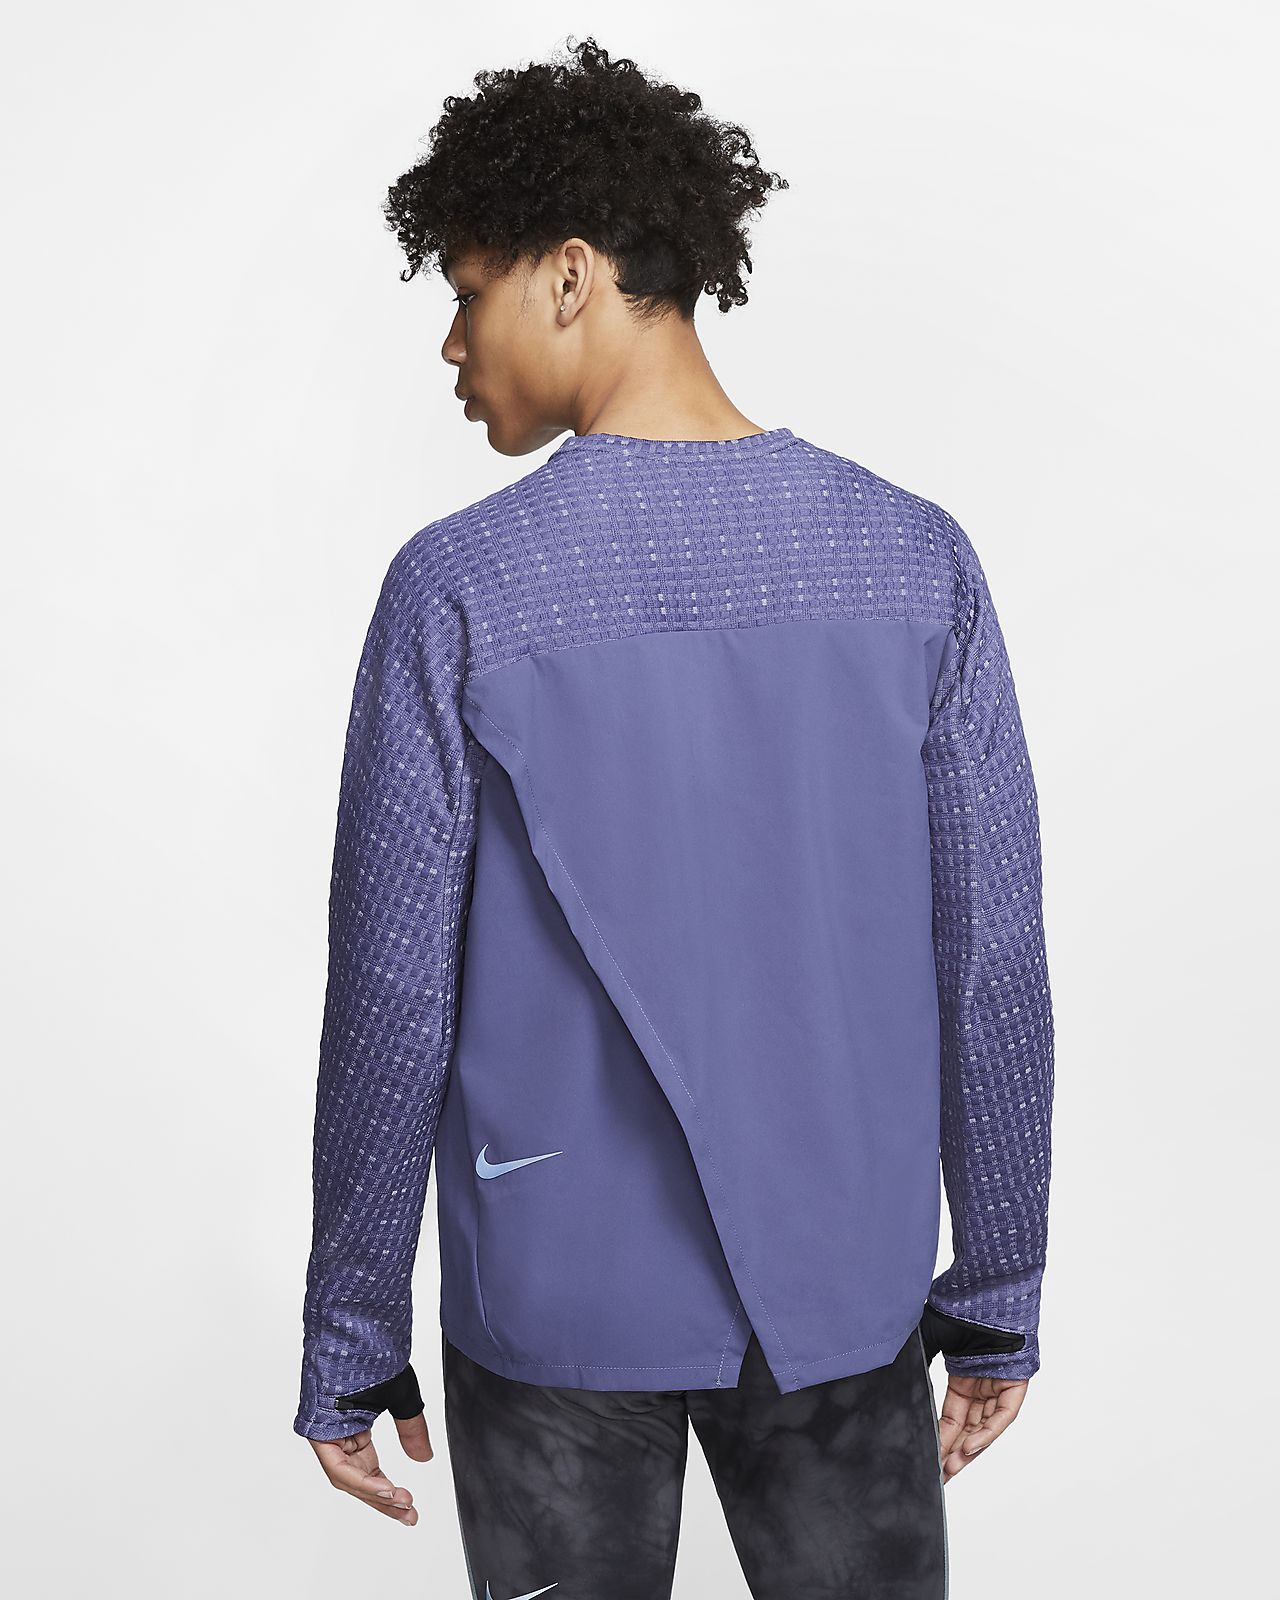 Long-Sleeve Running Top. Nike PT